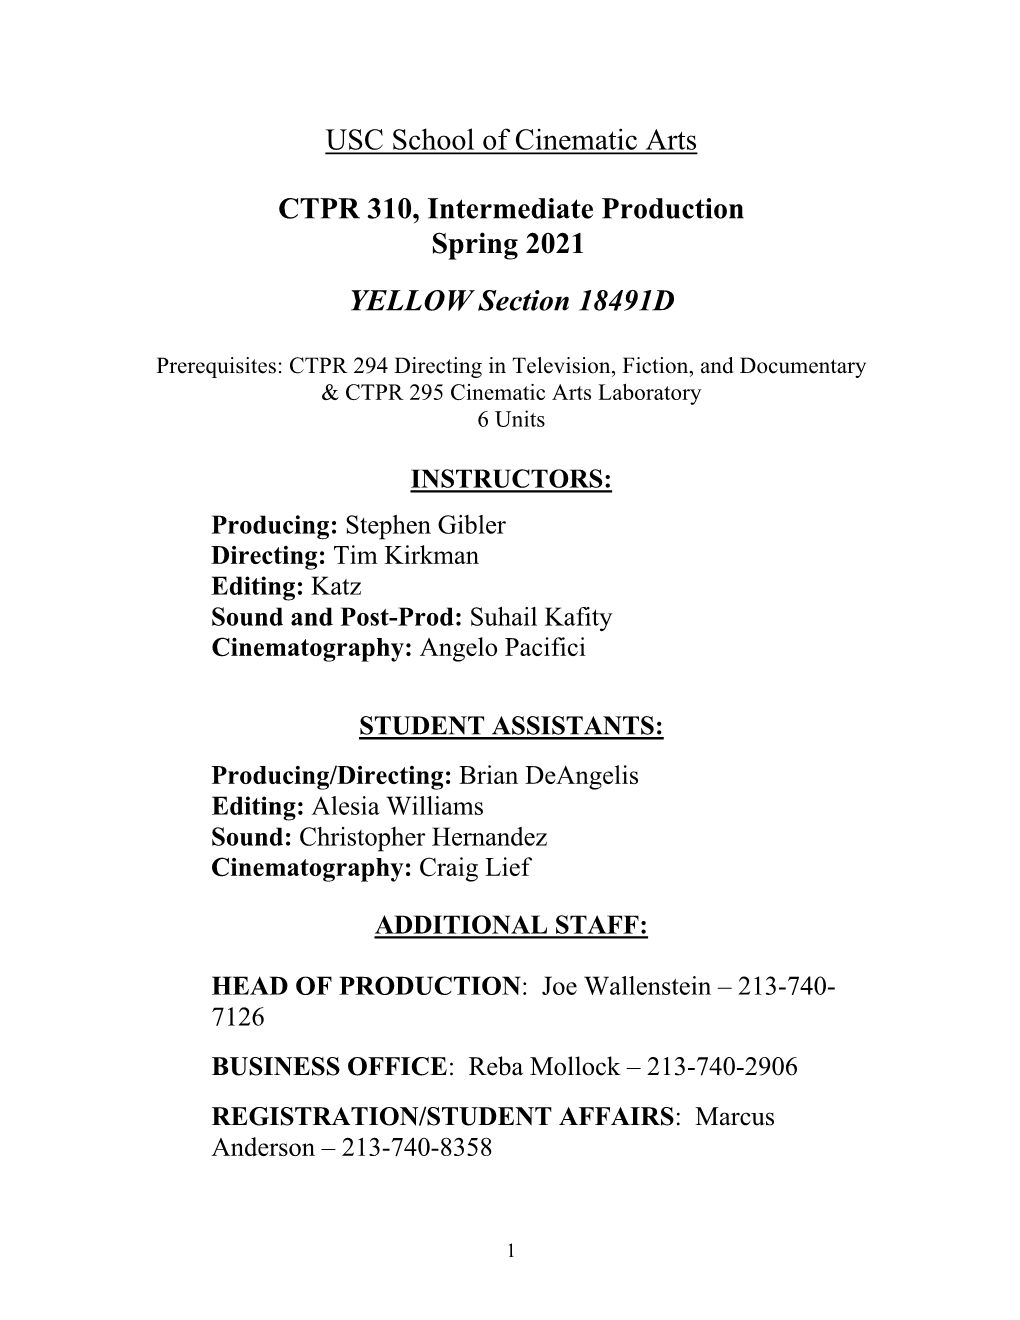 USC School of Cinematic Arts CTPR 310, Intermediate Production